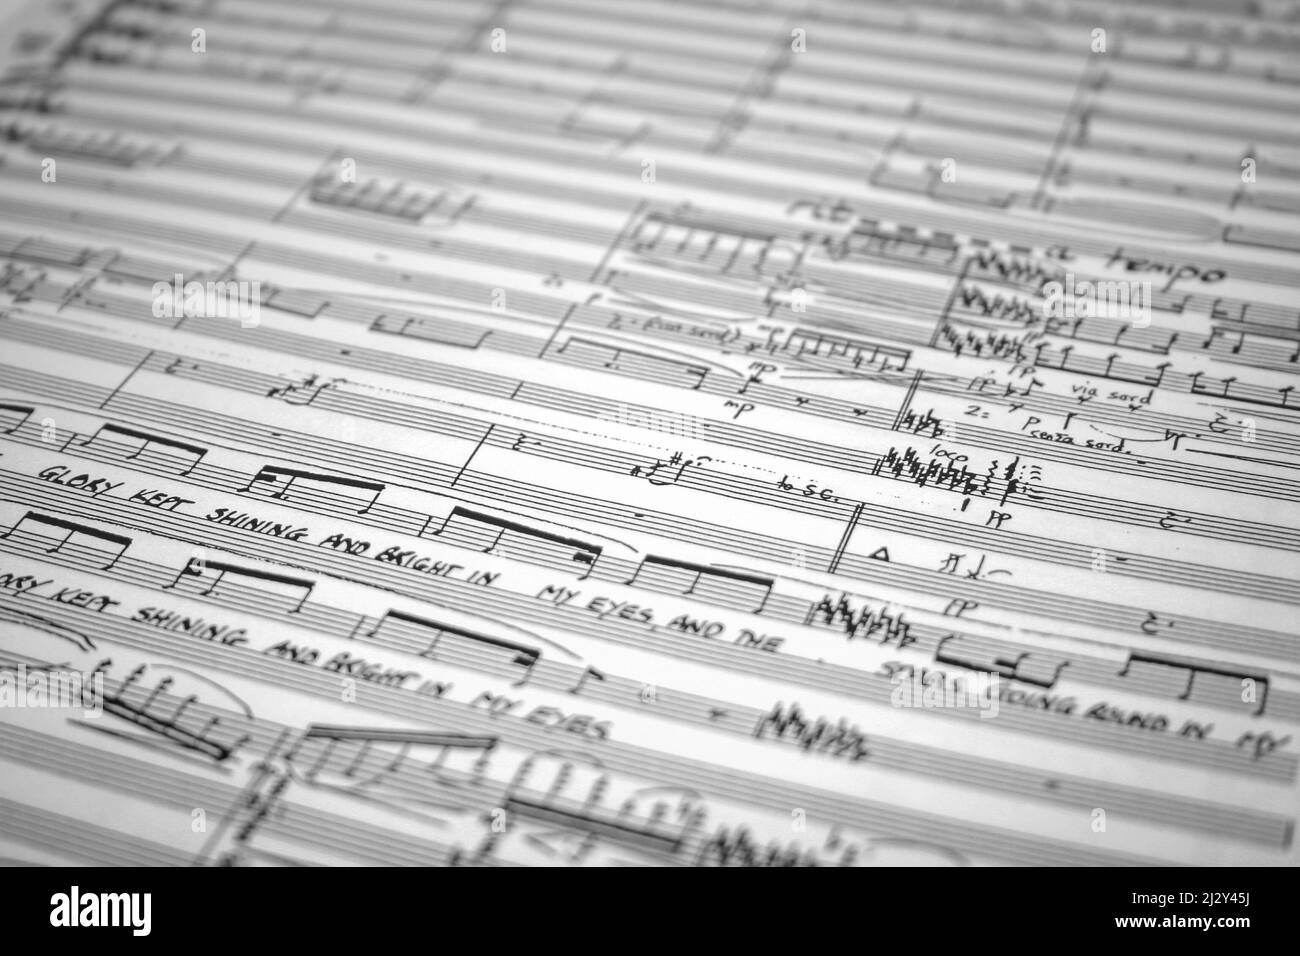 Music Manuscript. Full frame, selective focus on an open orchestral manuscript score. Stock Photo